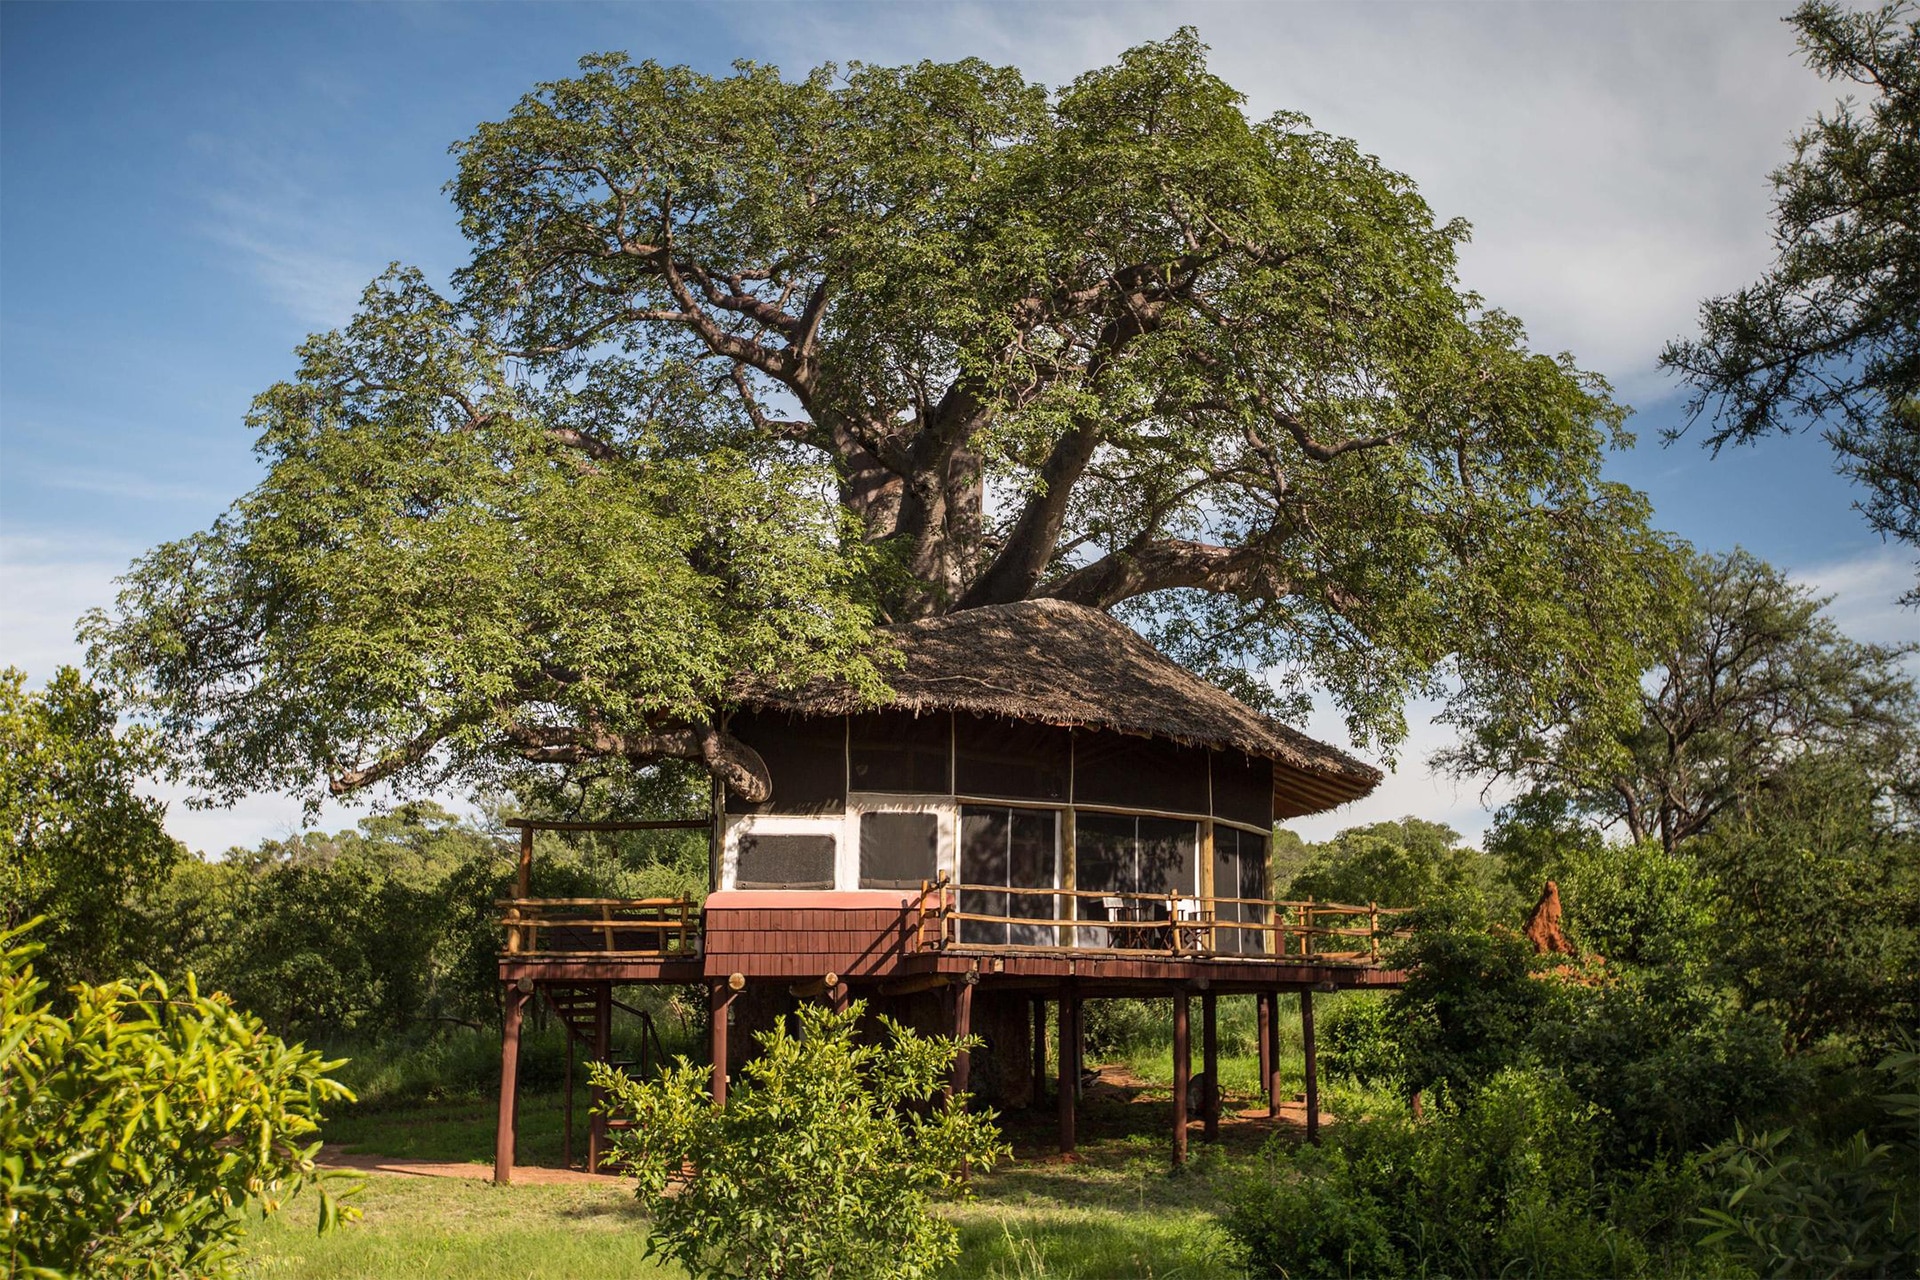 Elewana, one of the top lodge groups to accommodate you while on a Tanzania safari